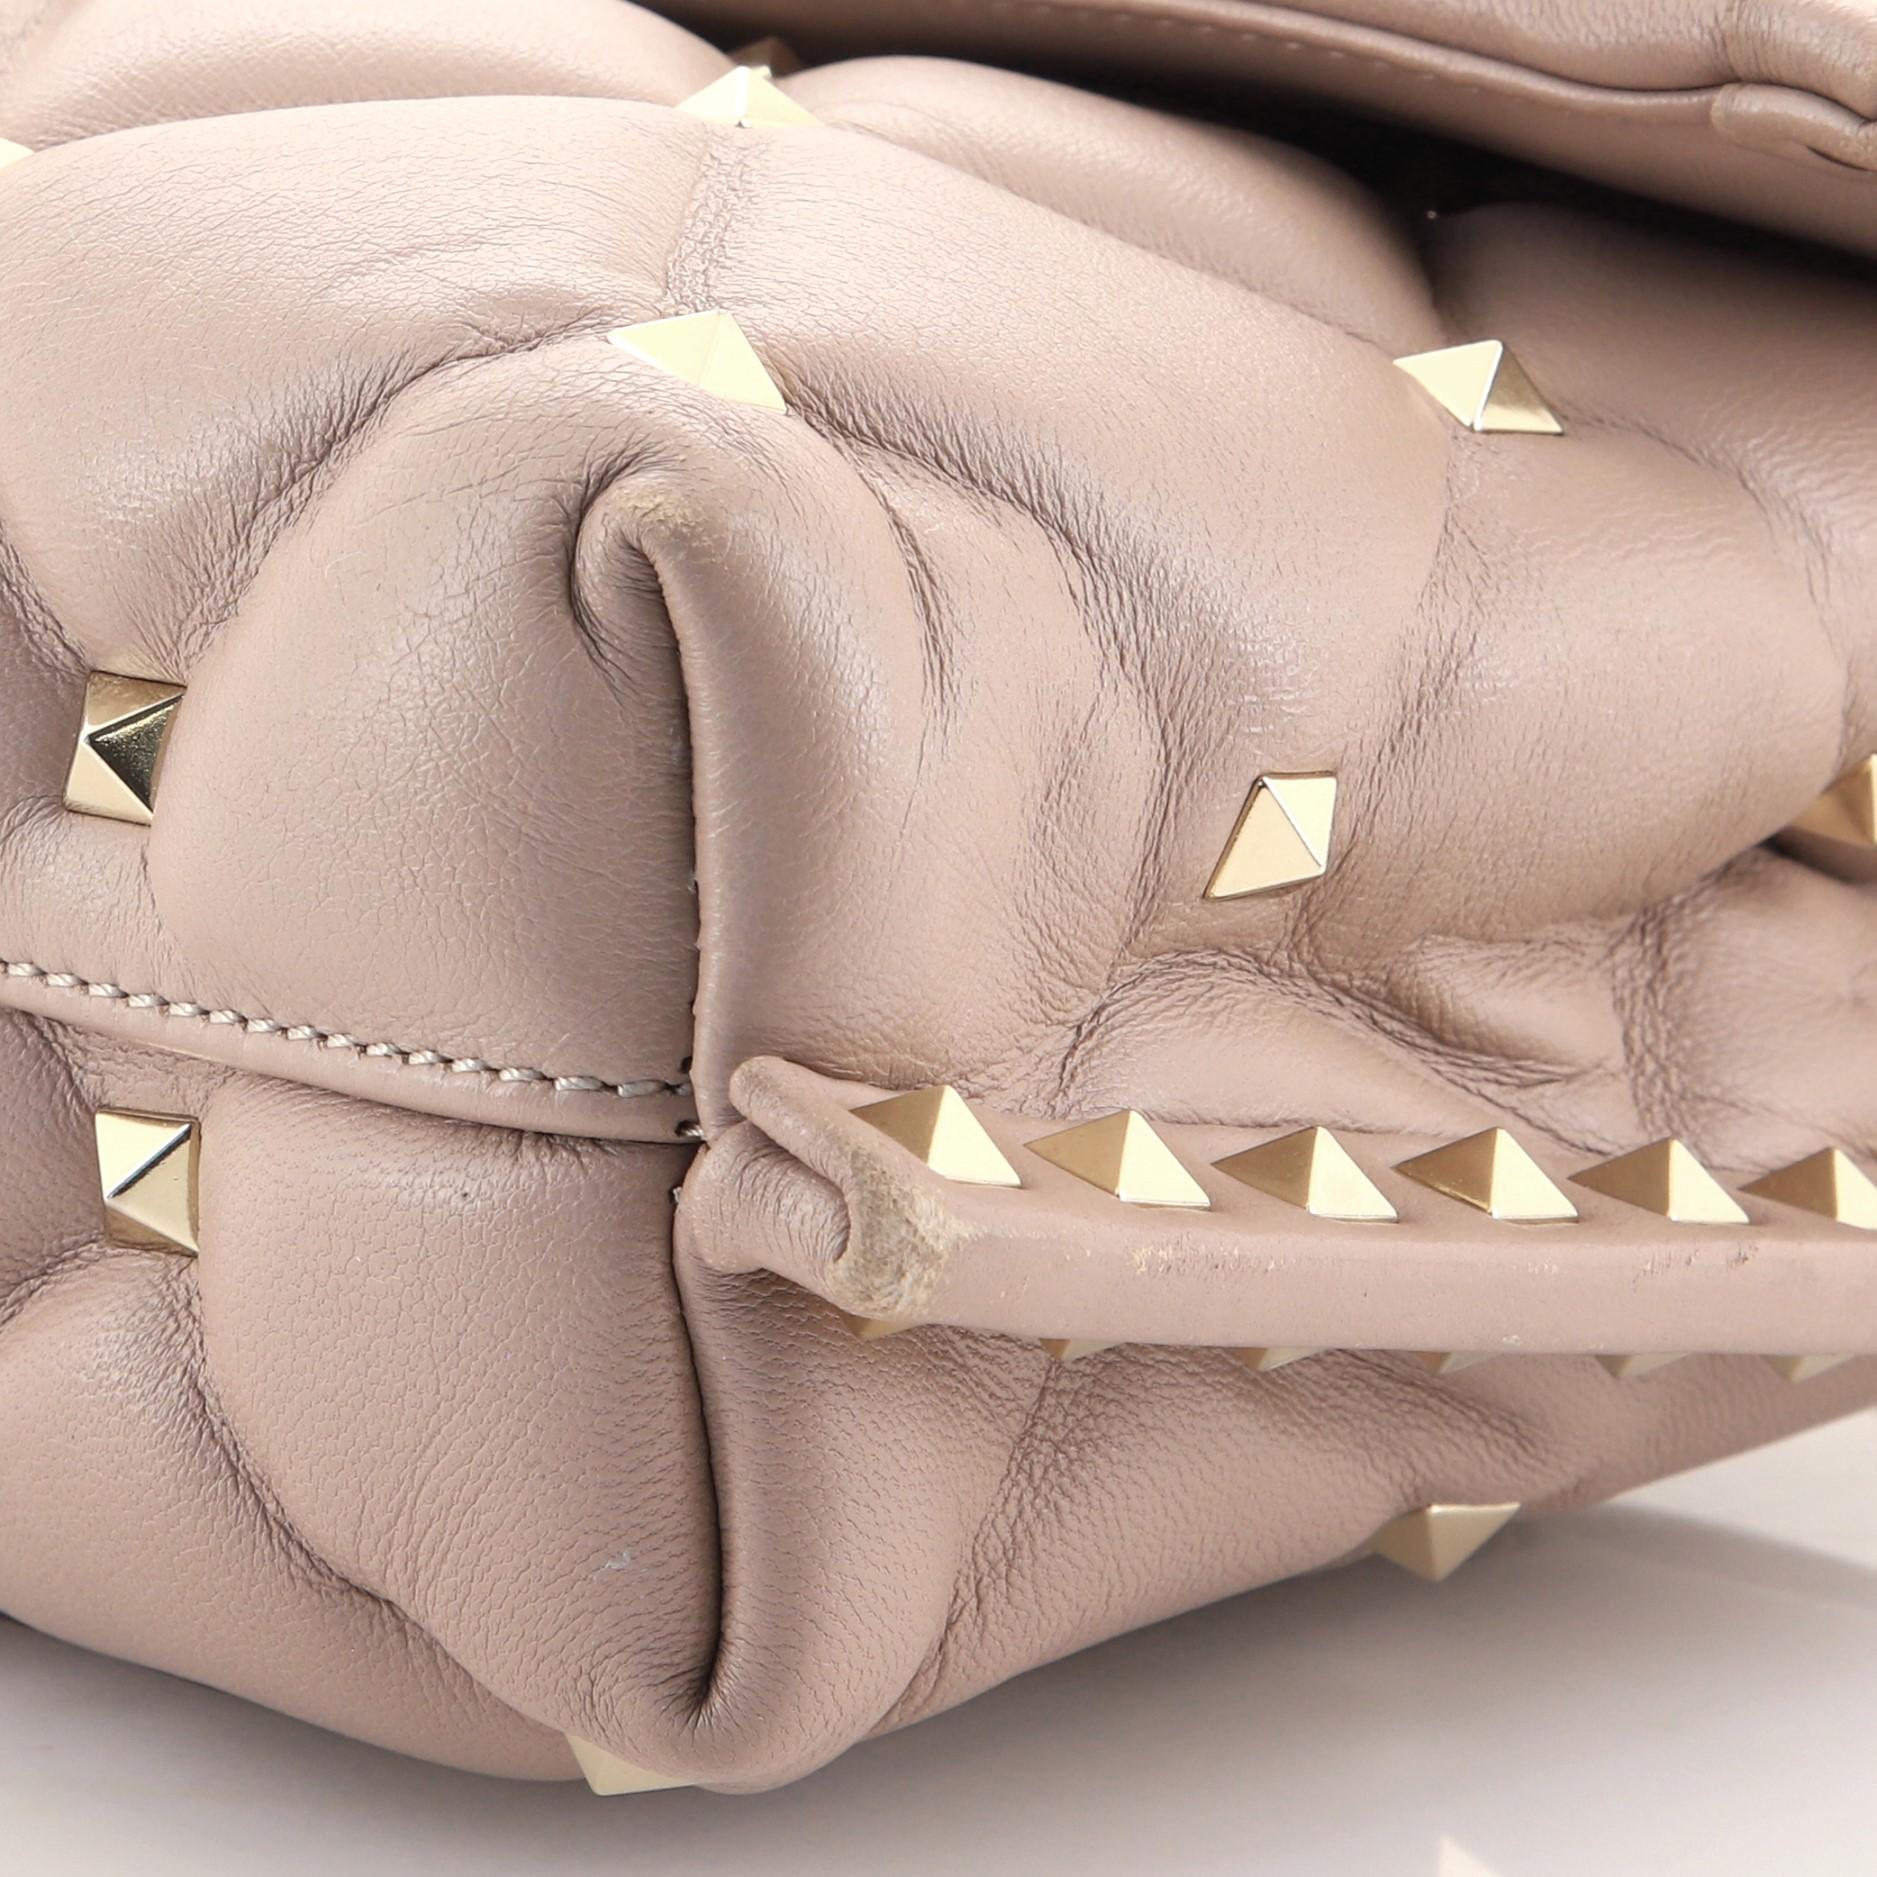 Valentino Candystud Crossbody Bag Leather Medium 1